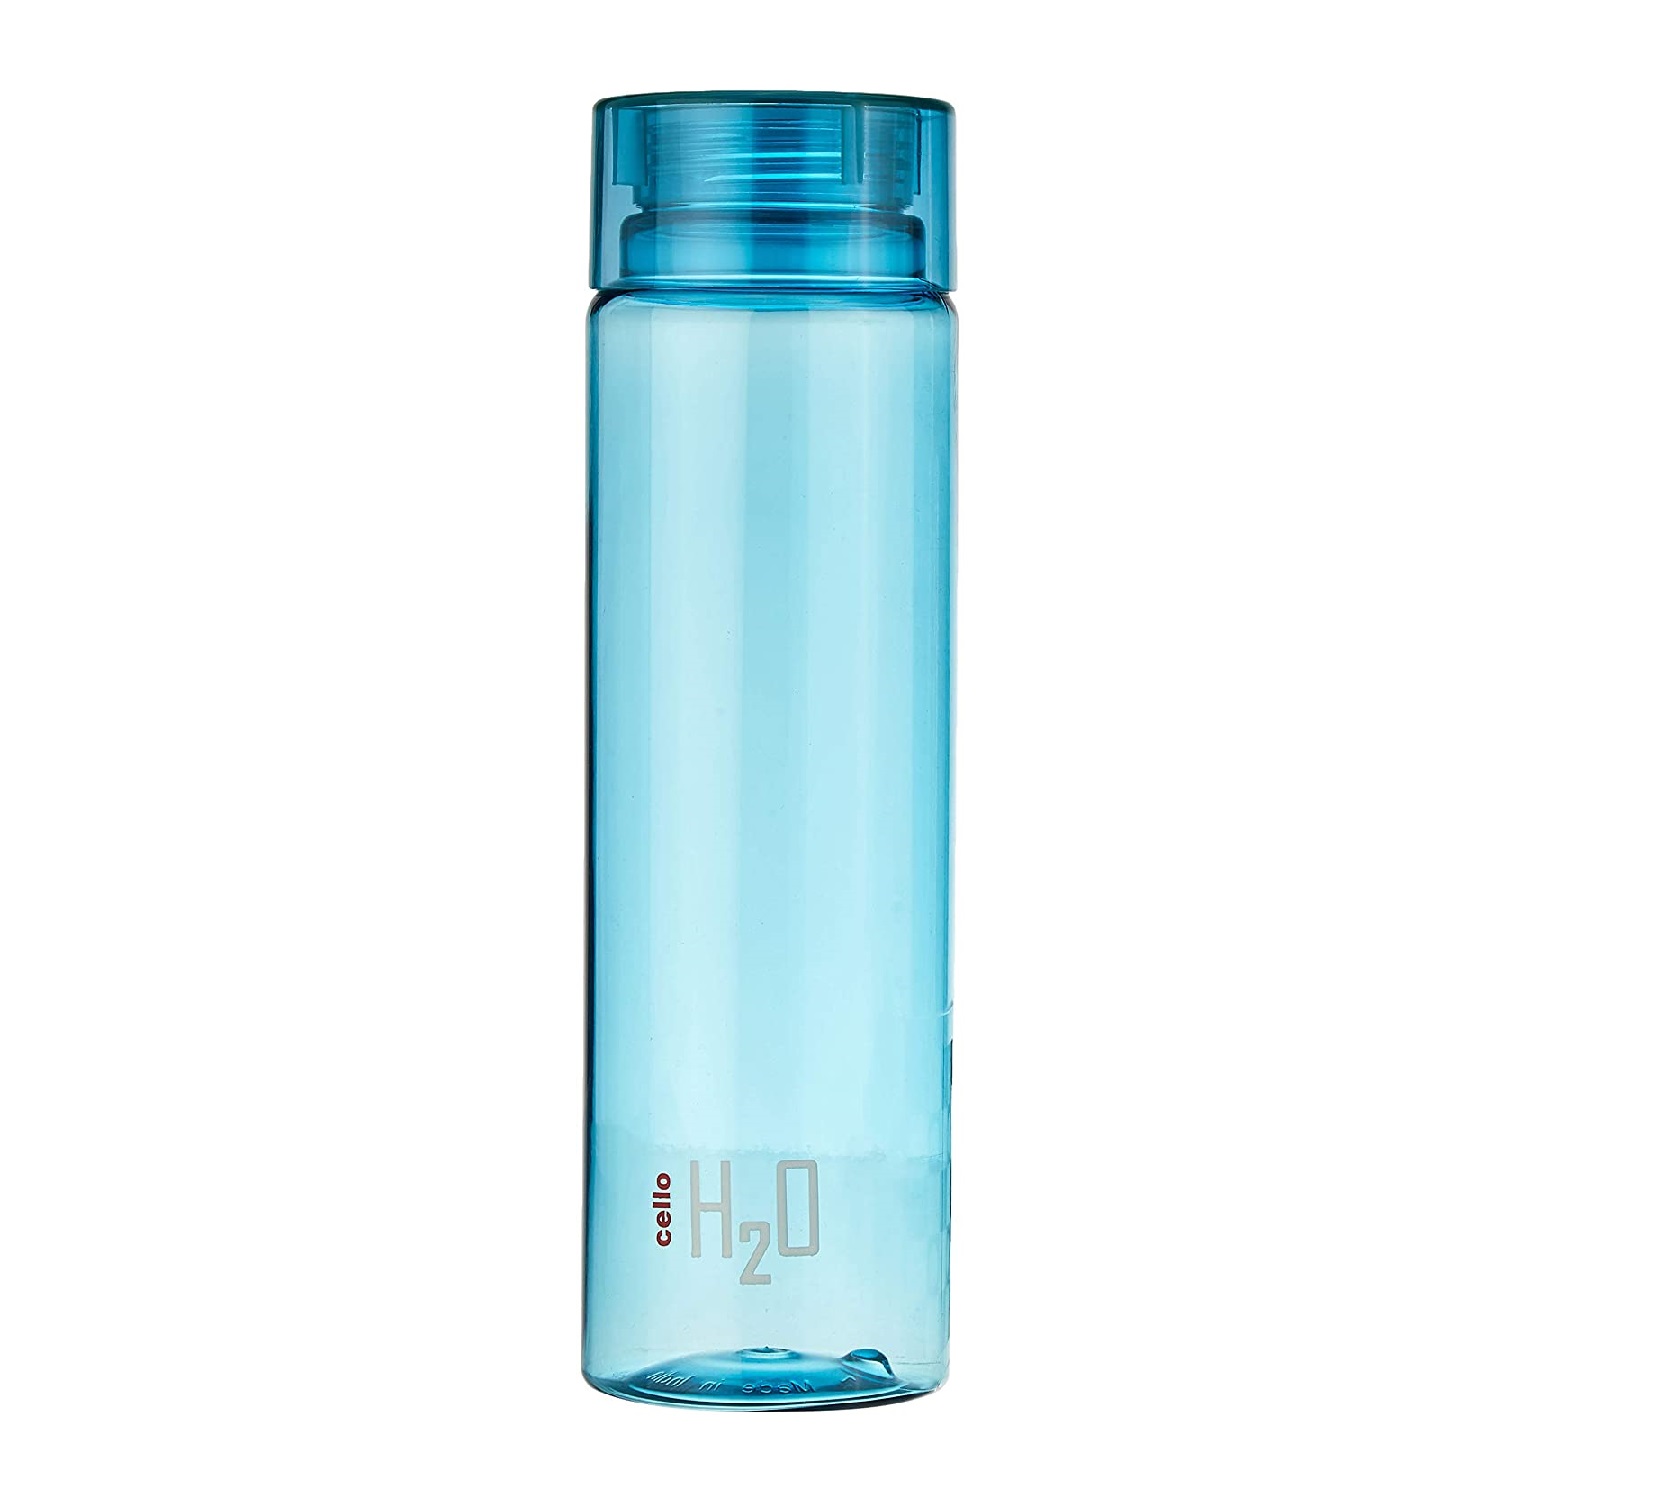 Cello H2O Premium Plastic Water Bottle (Blue, 1L)